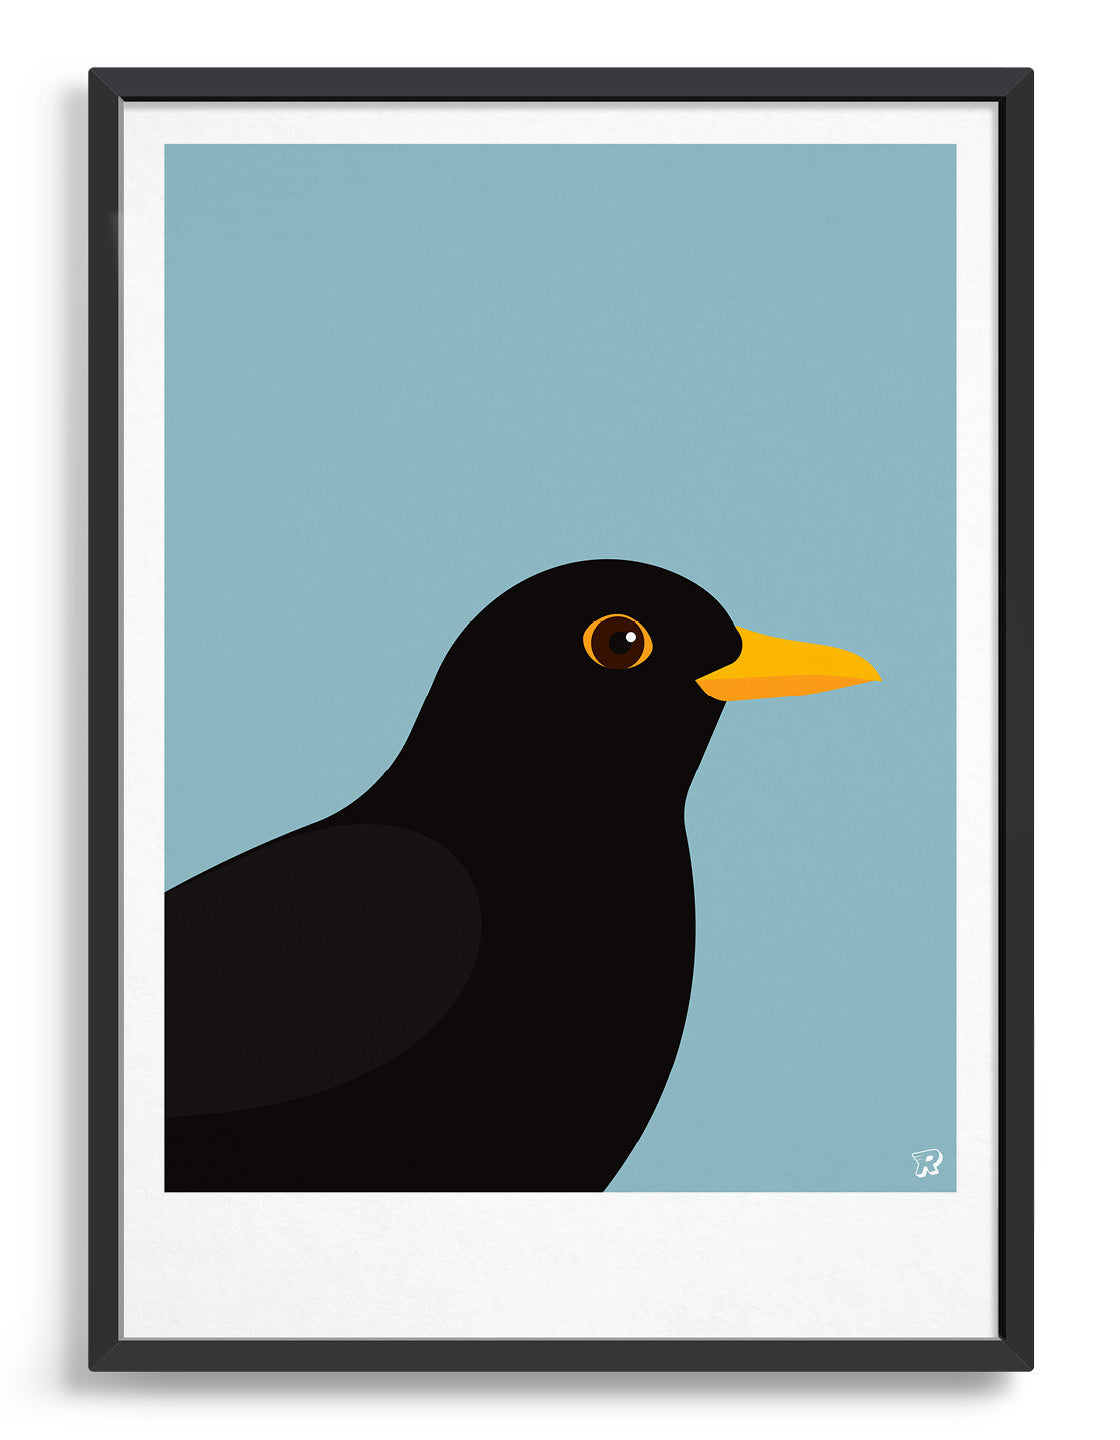 modern Blackbird illustration against a light blue background